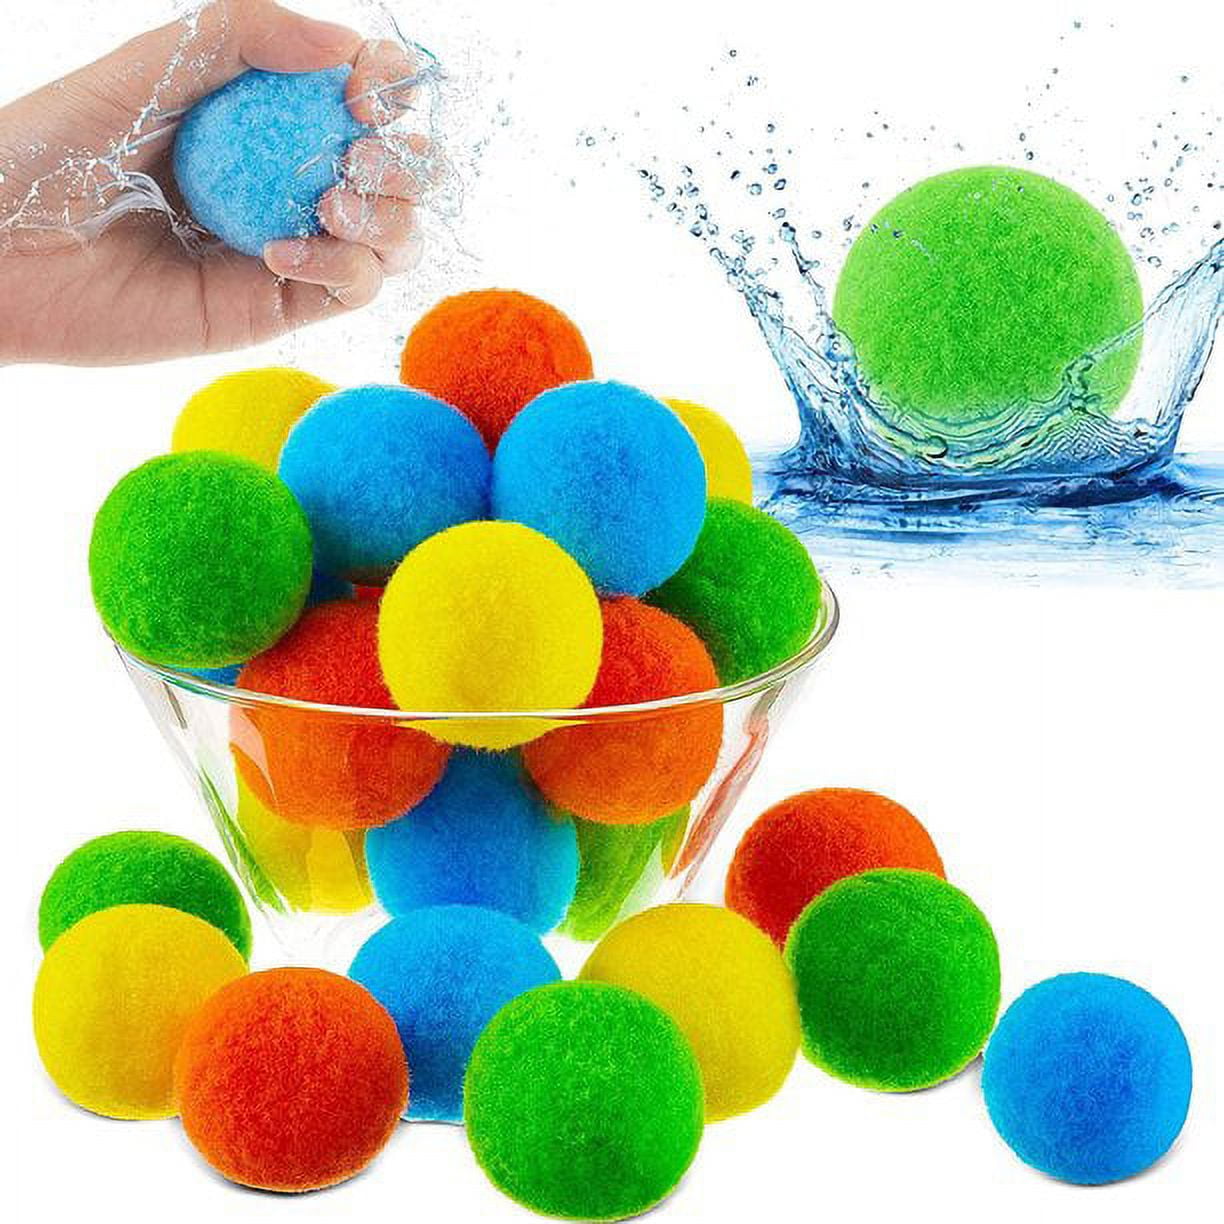 HomeKaren 51 Water Balls Reusable Cotton Splash Toys for Pool, Beach,  Outdoor Fun